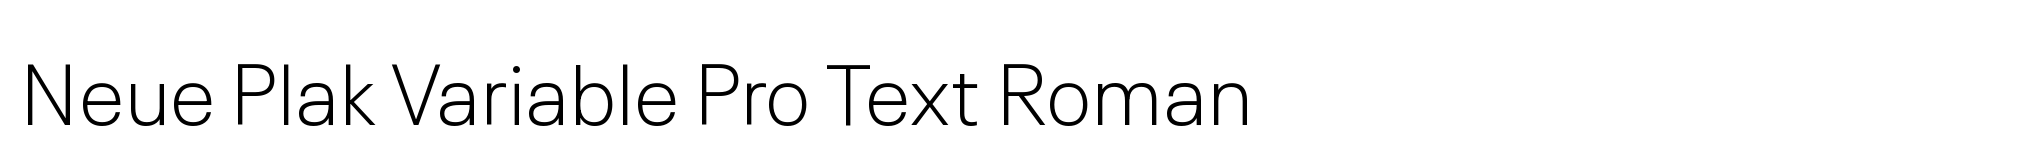 Neue Plak Variable Pro Text Roman image